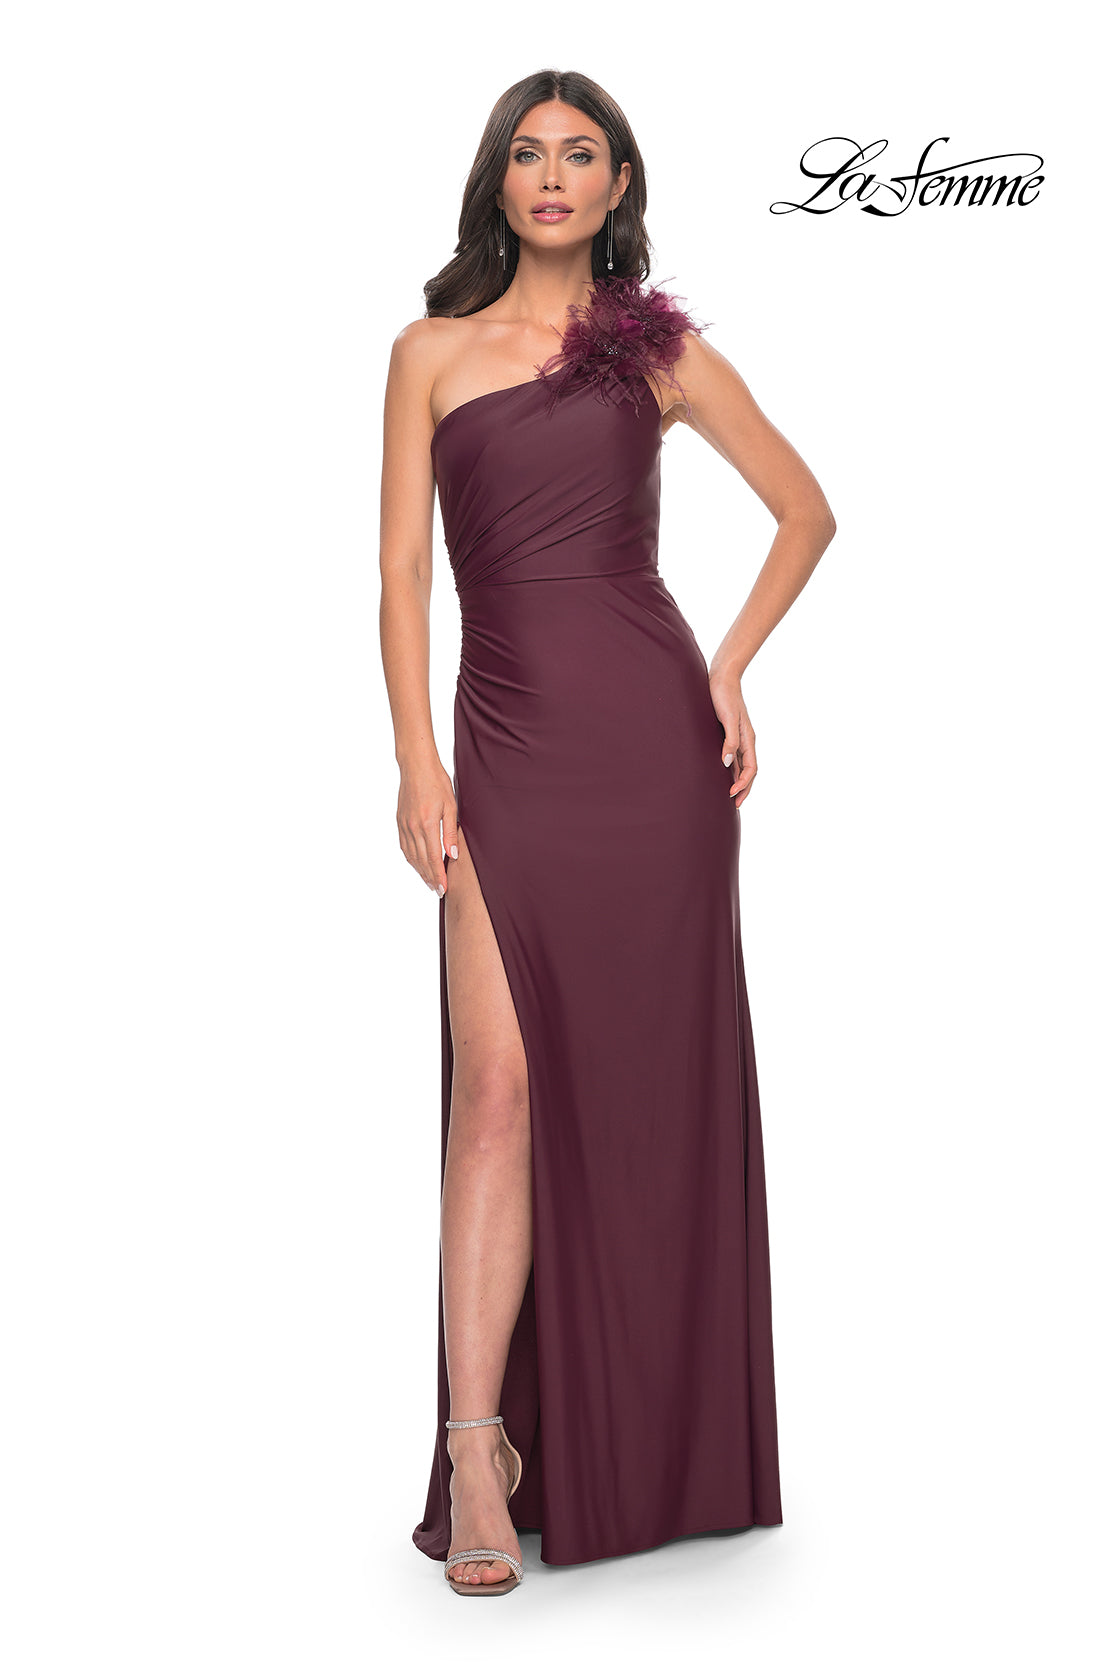 La-Femme-32076-One-Shoulder-Neckline-Zipper-Back-High-Slit-Jersey-Fitted-Dark-Wine-Evening-Dress-B-Chic-Fashions-Prom-Dress